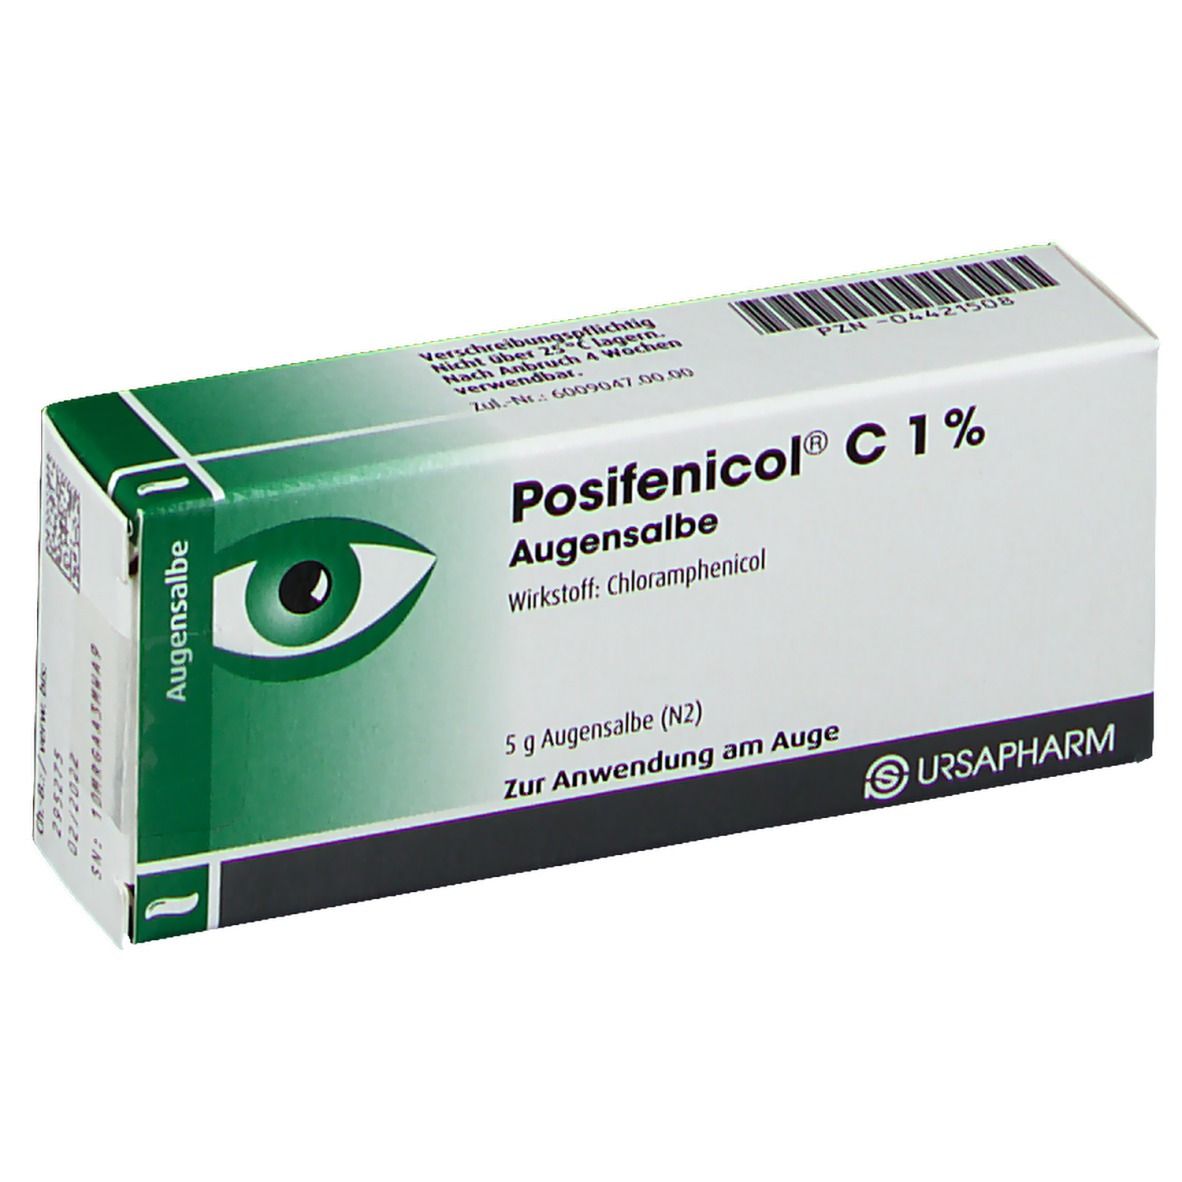 Posifenicol ® C 1% Augensalbe 